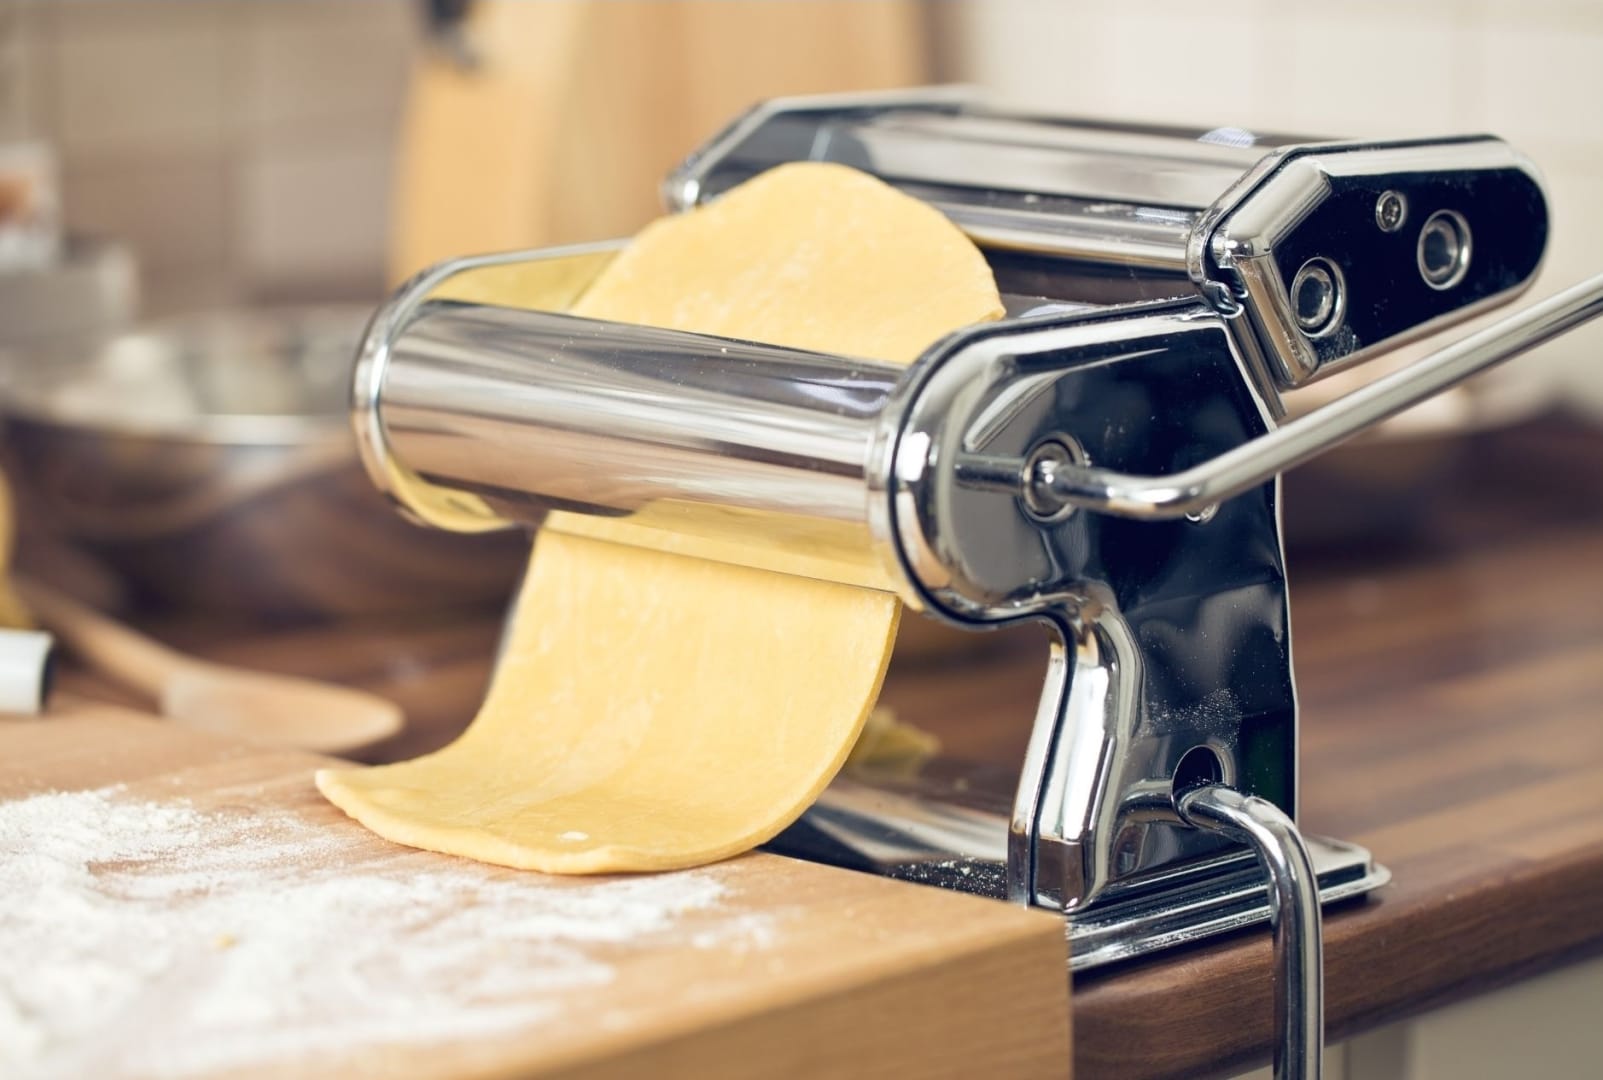 How to make homemade Phyllo using a Pasta Machine - Kopiaste..to